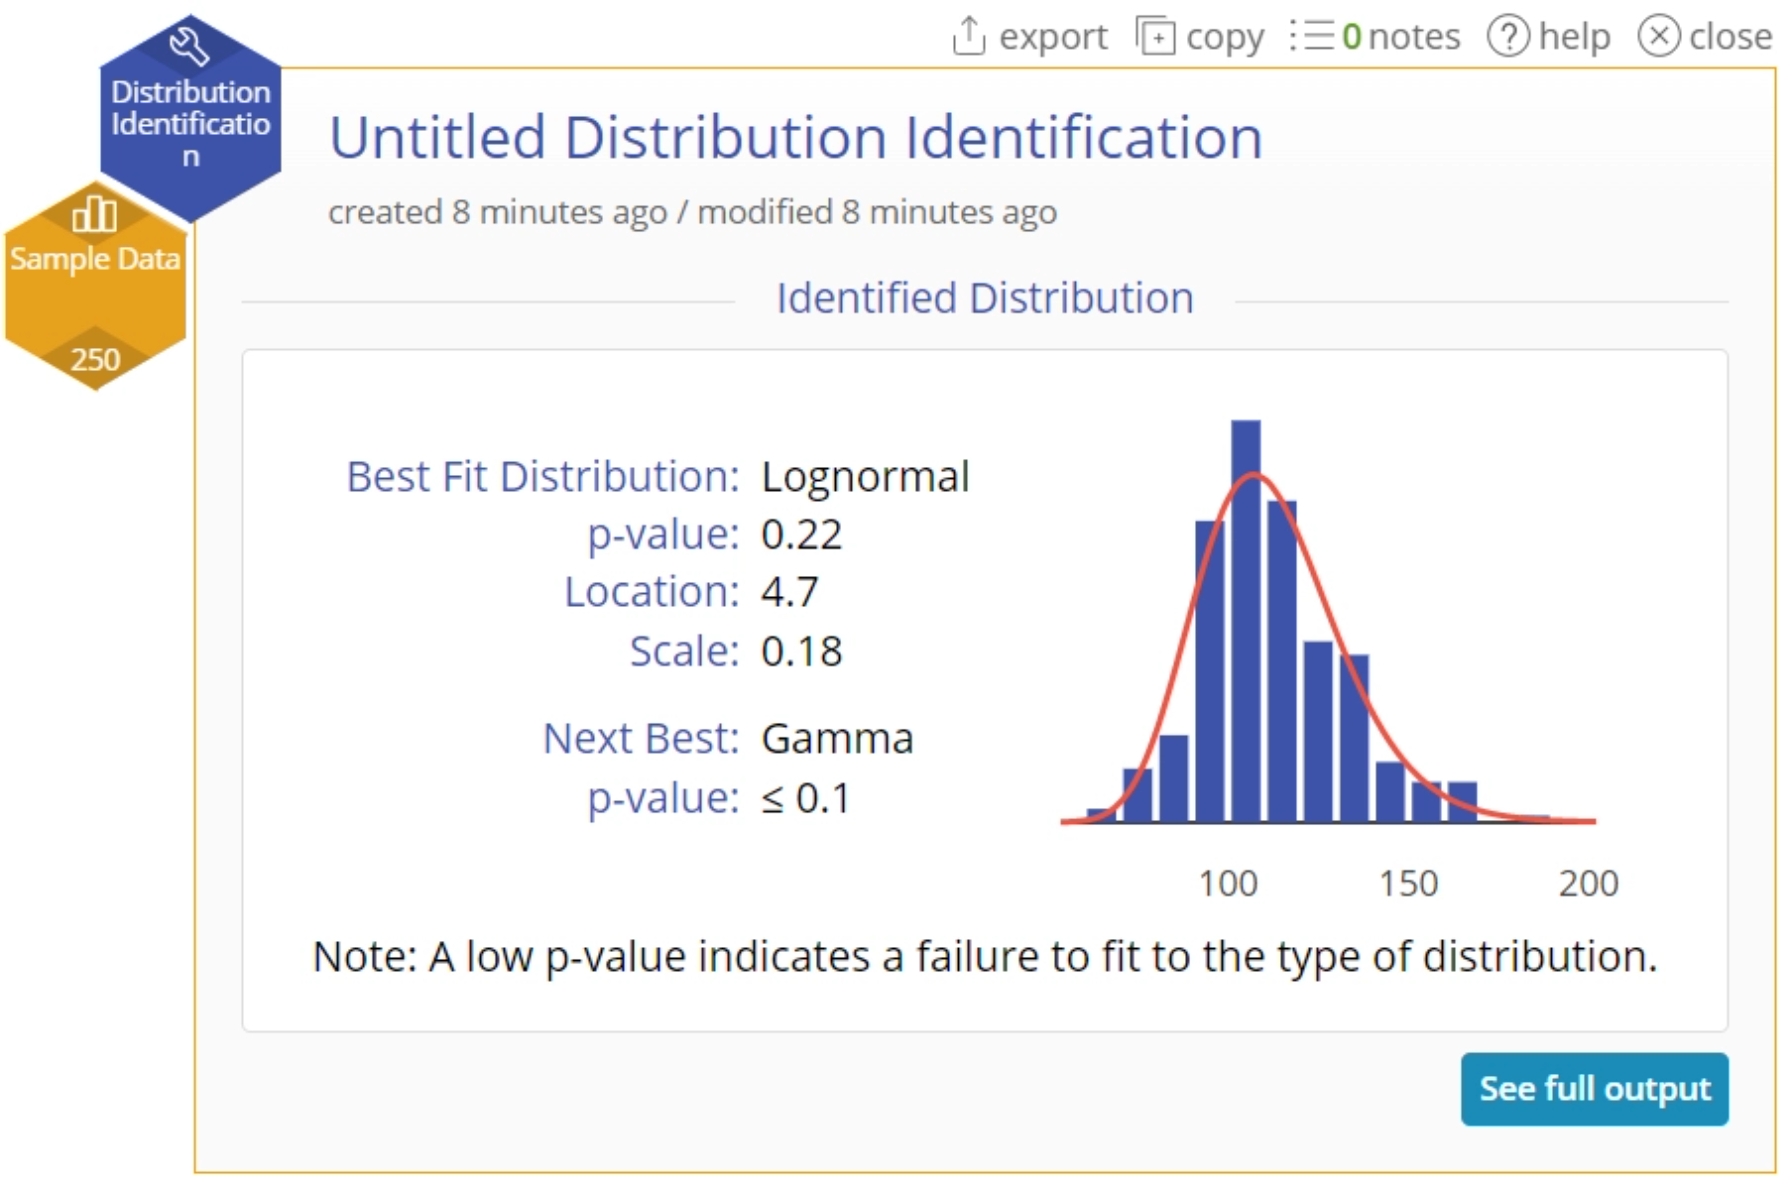 Distribution id summary screen.